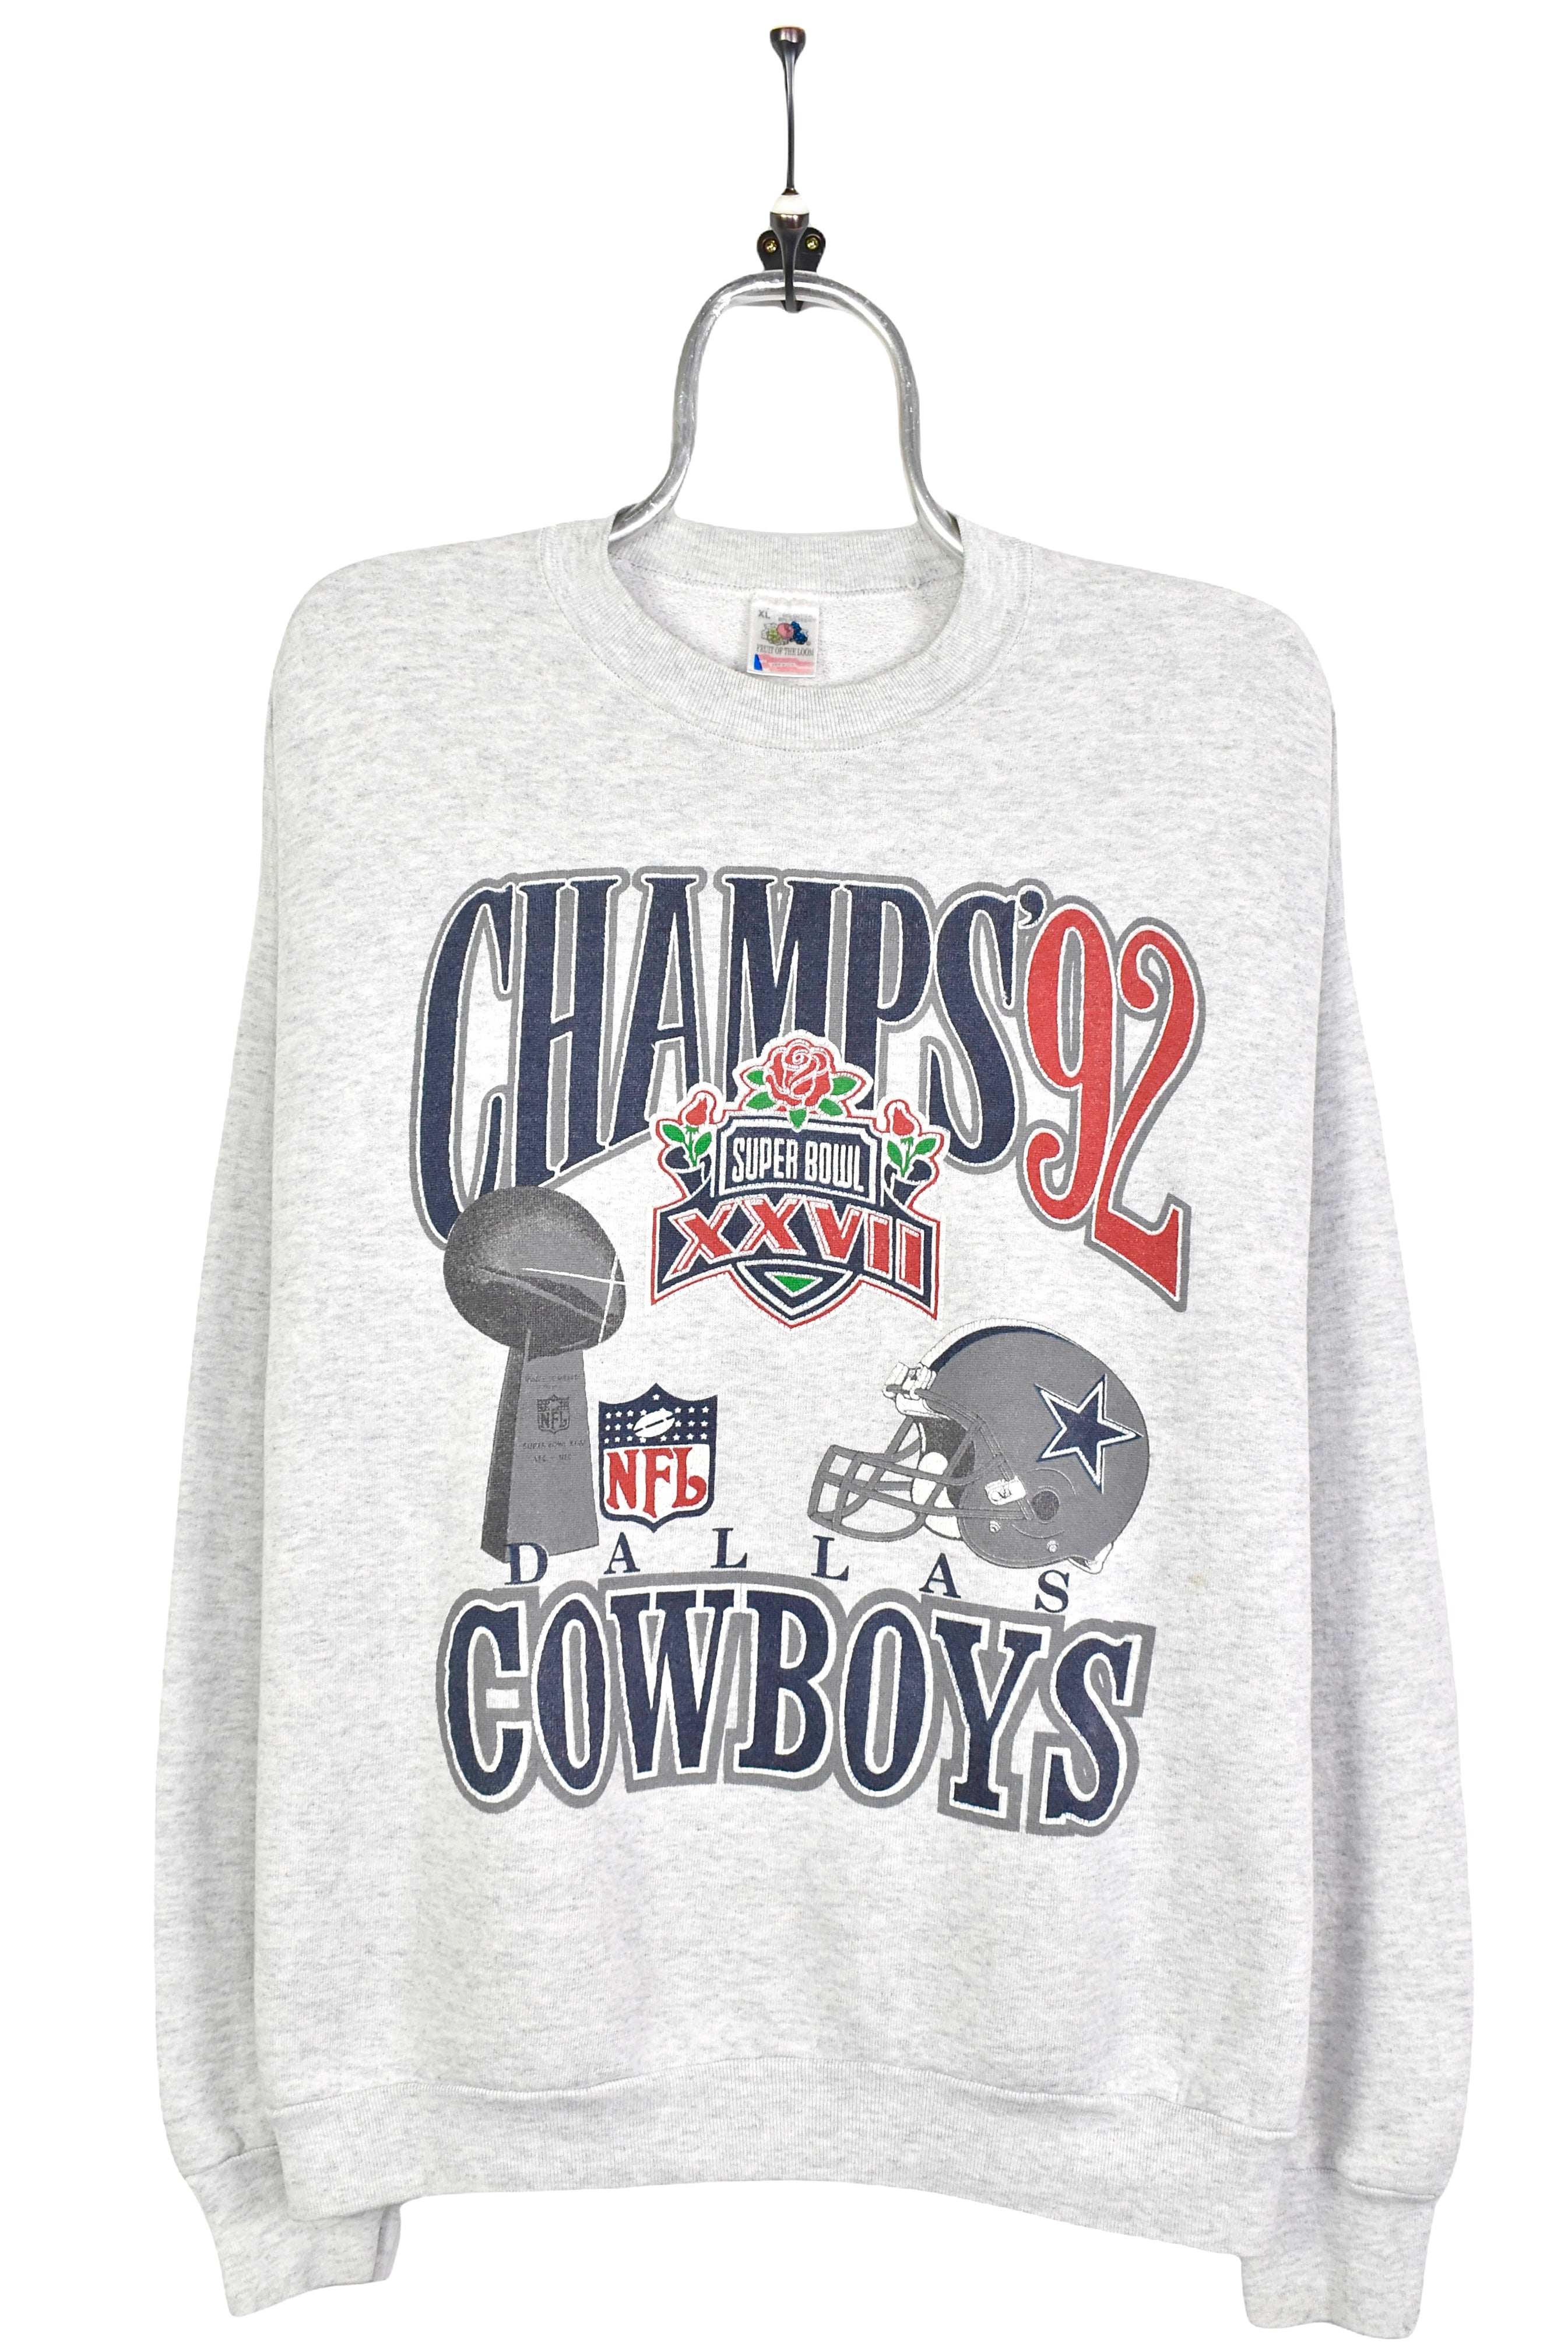 Vintage 1992 NFL Dallas Cowboys grey sweatshirt | LARGE PRO SPORT